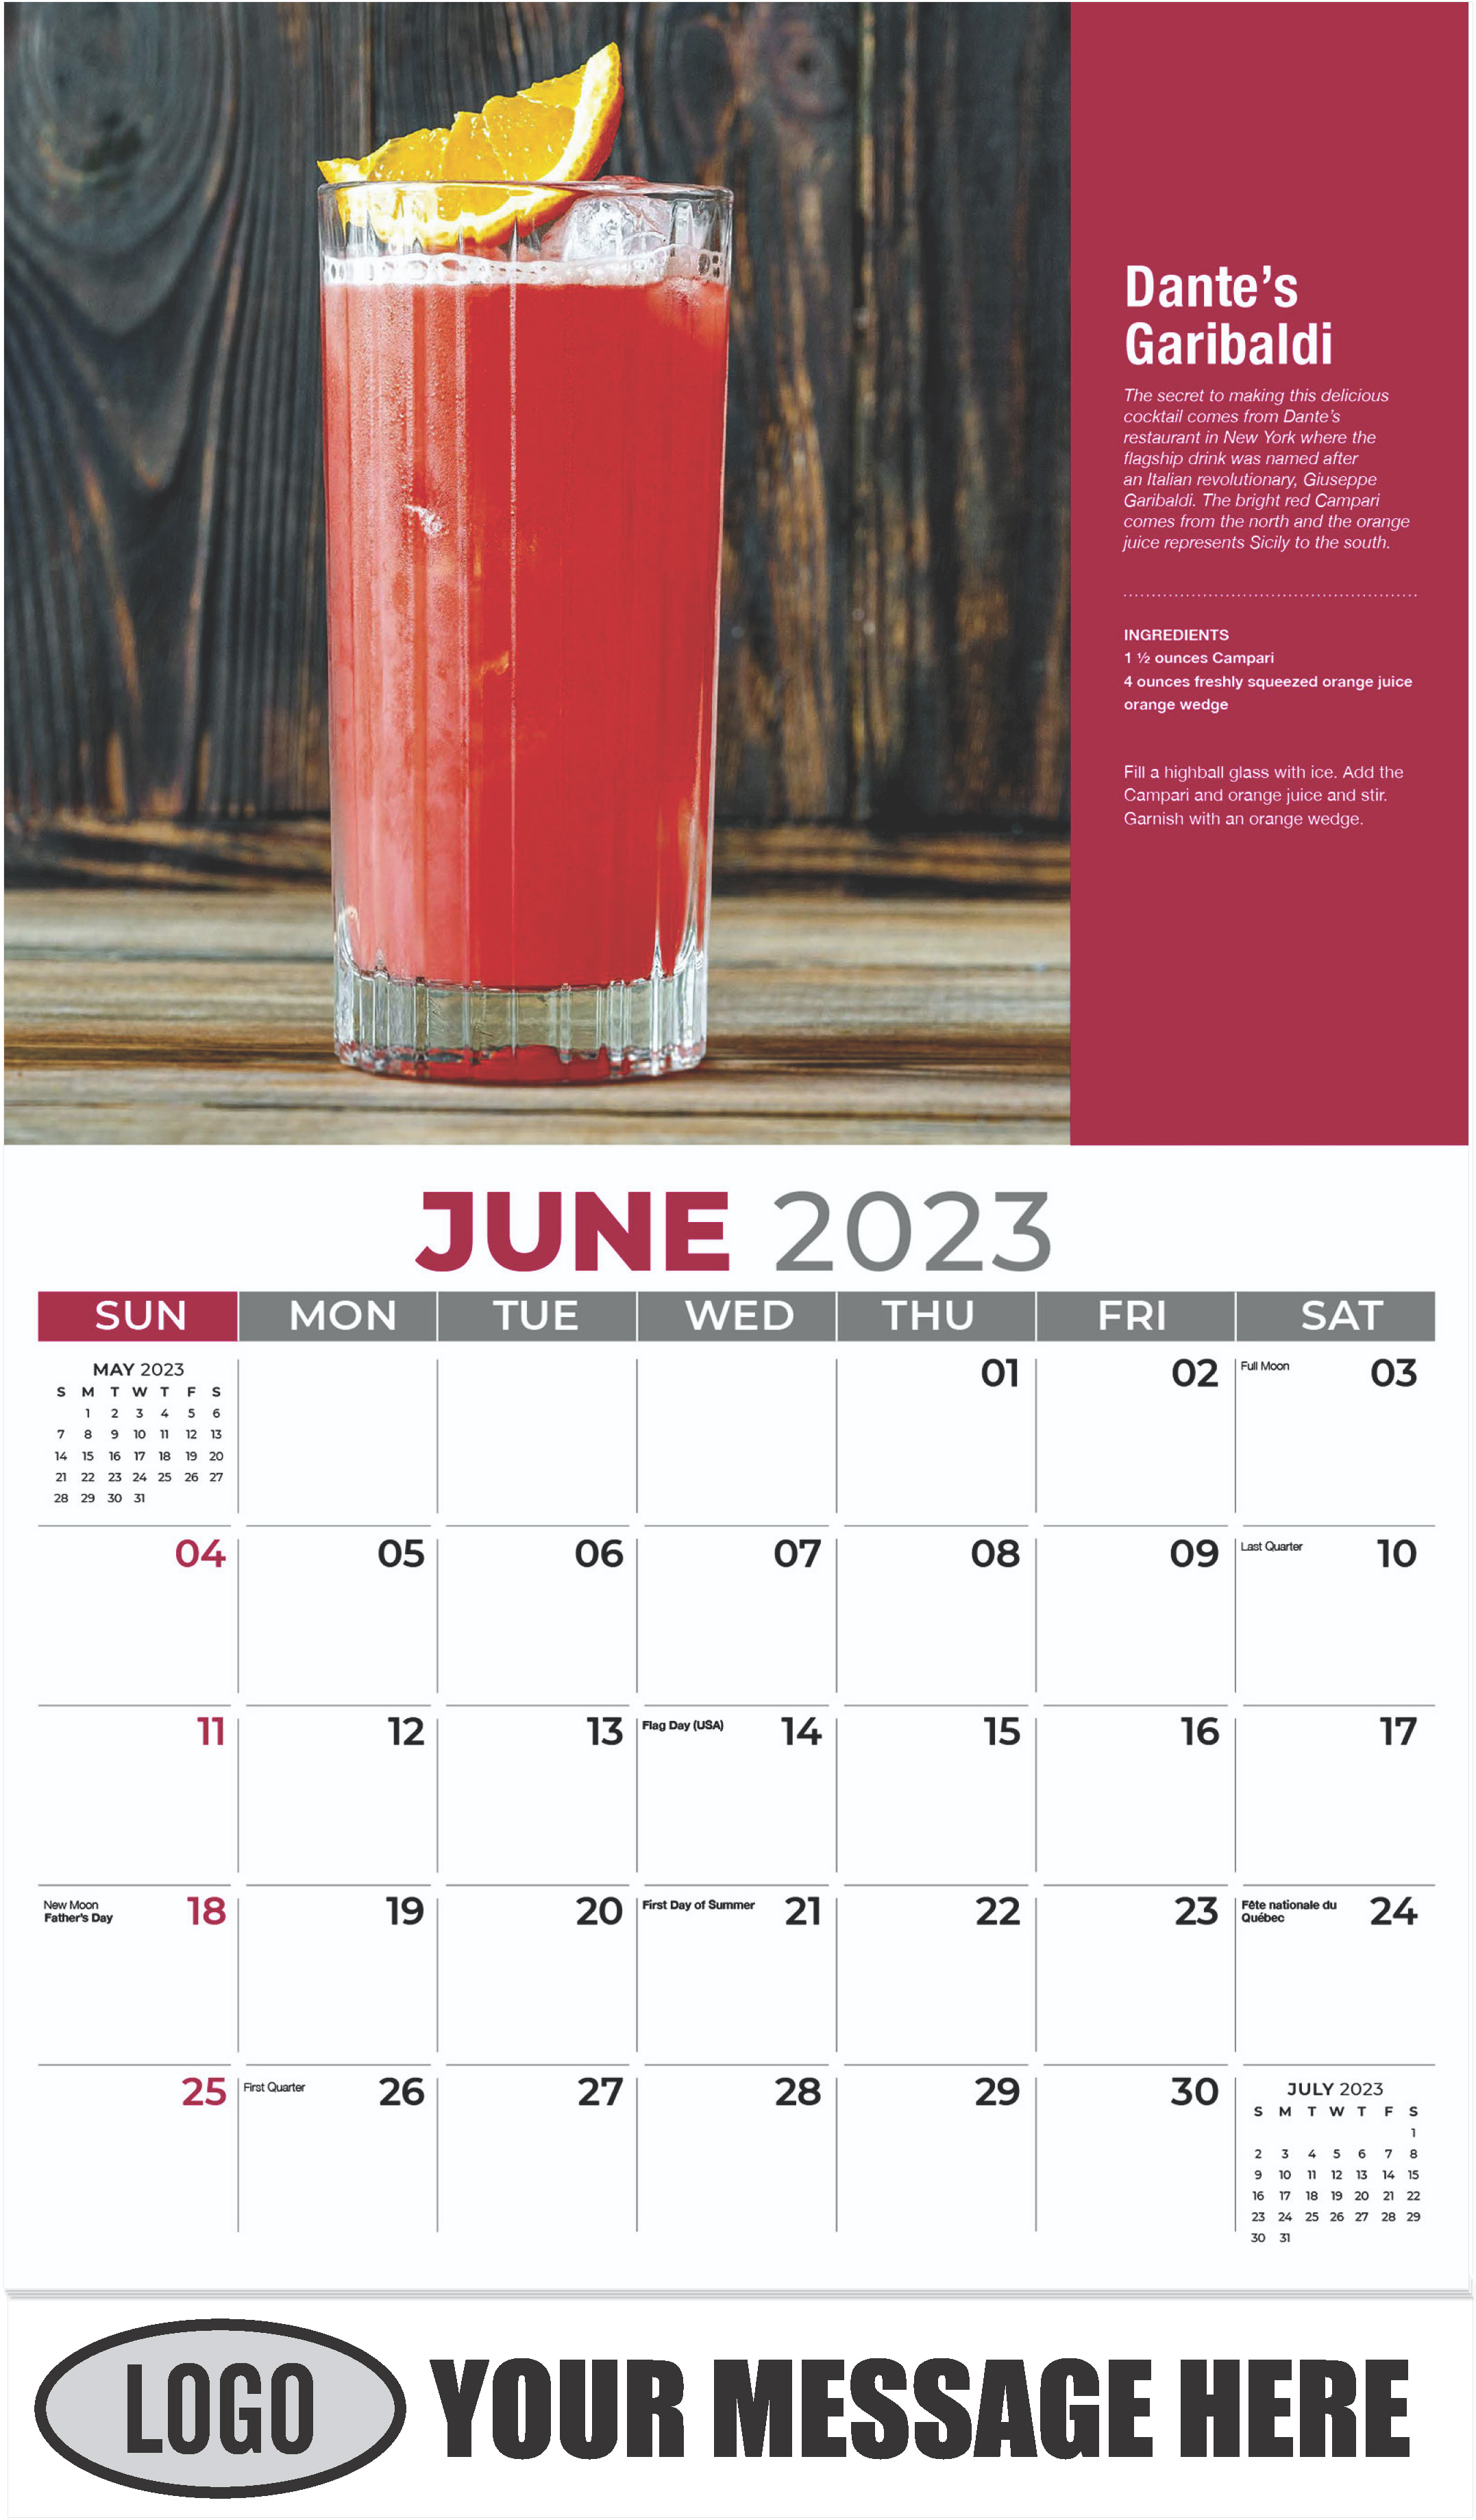 Dante’s Garibaldi - June - Happy Hour Cocktails 2023 Promotional Calendar